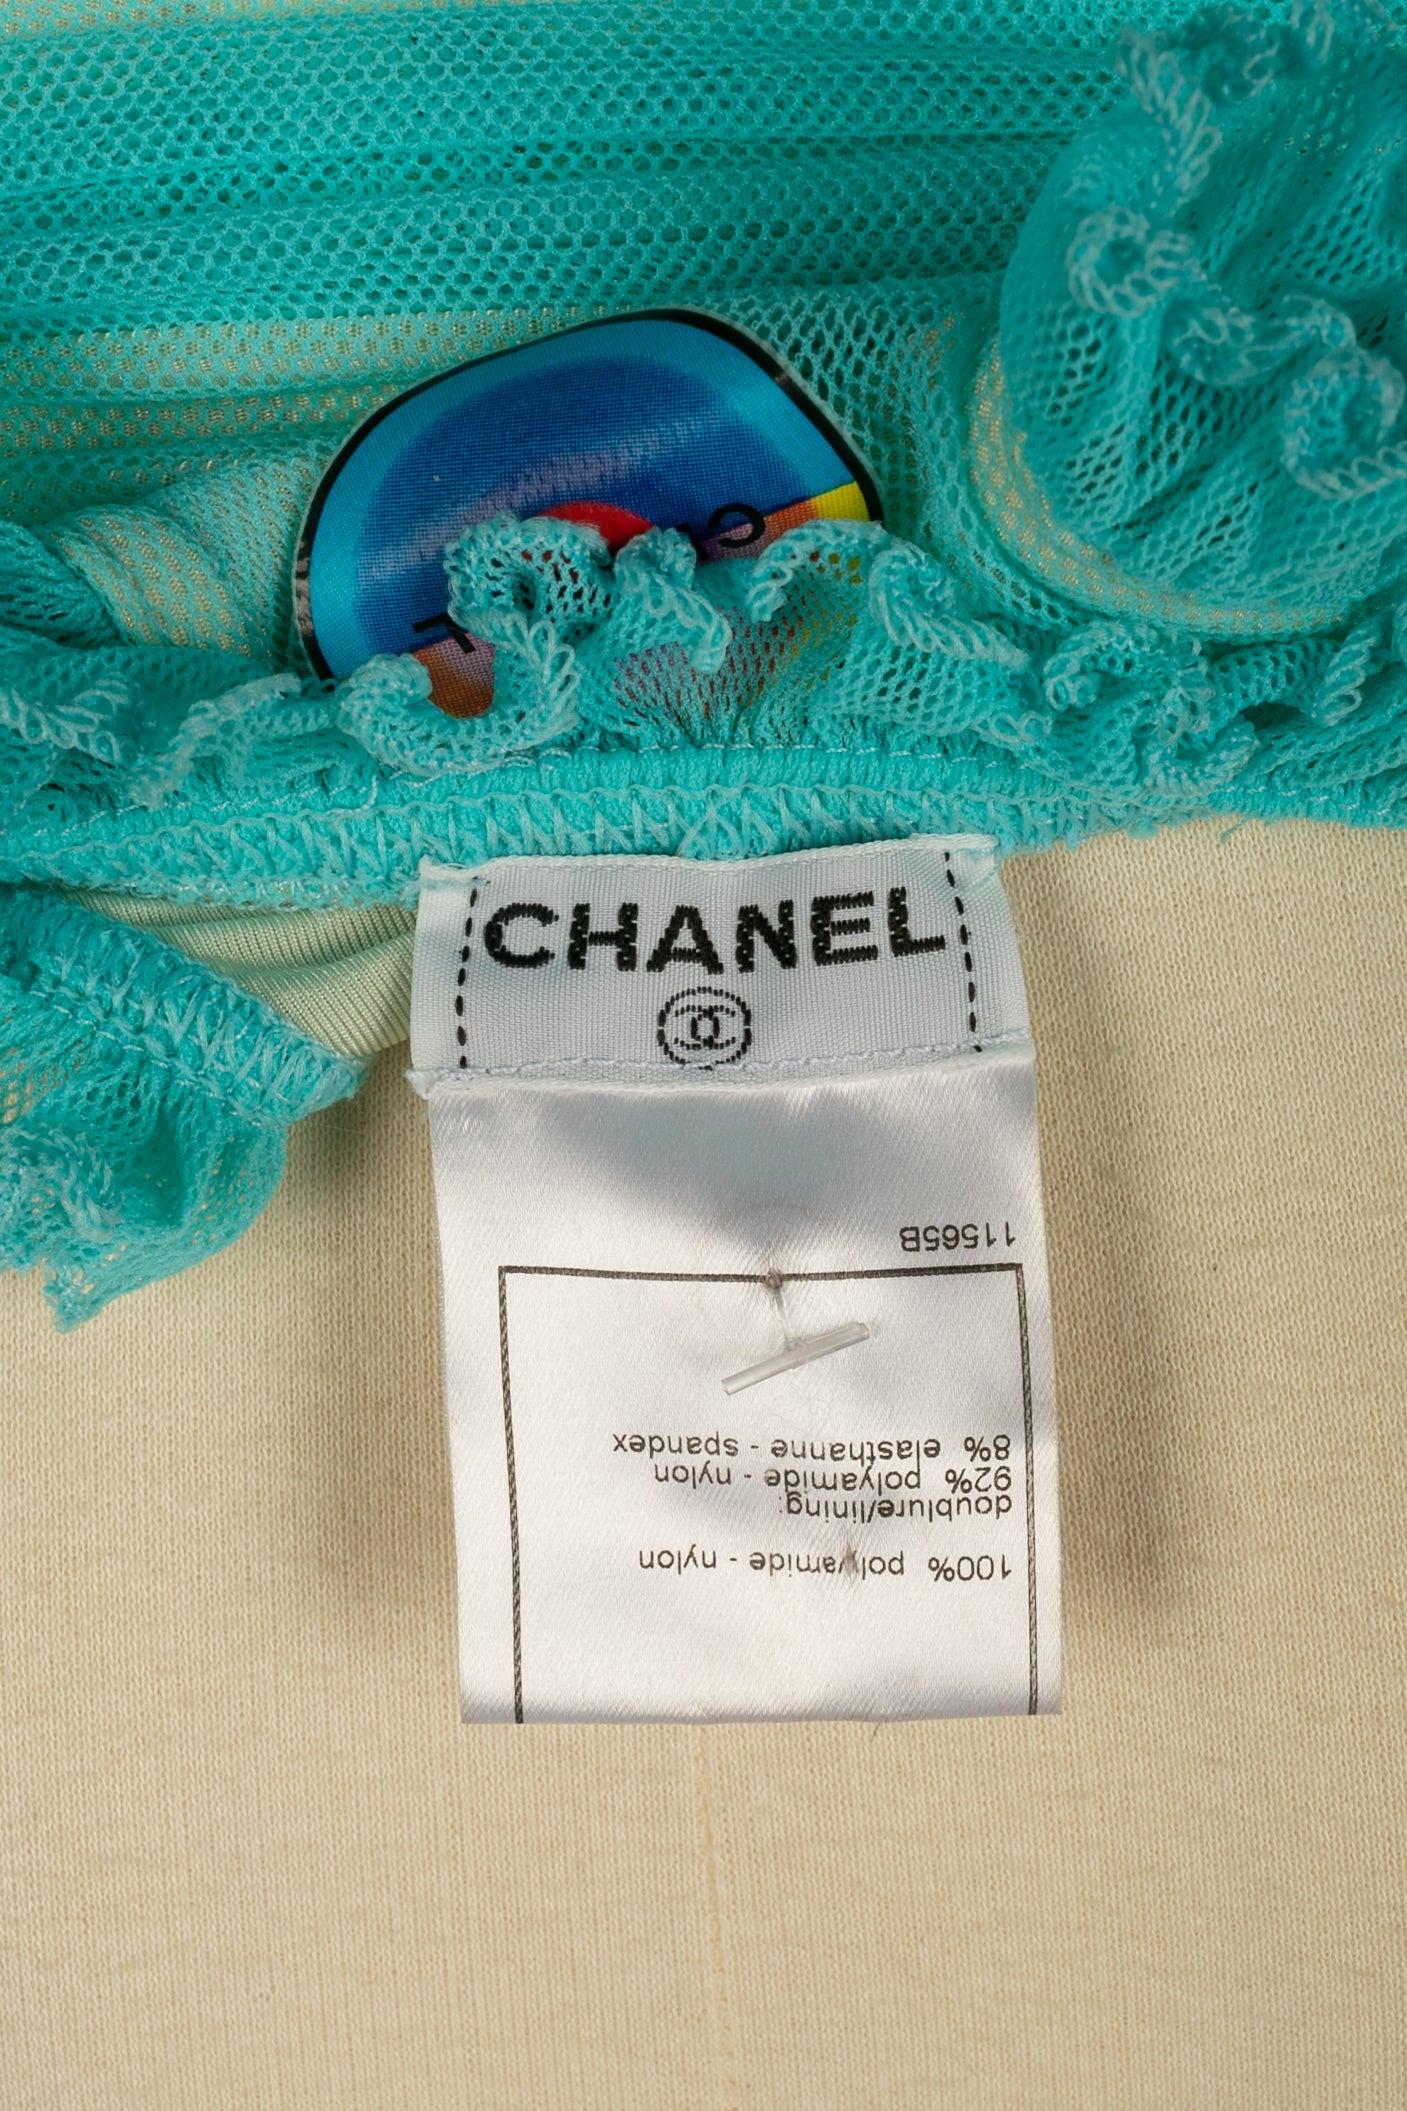 Chanel Turquoise Swimsuit / Bodysuit, 2001 4